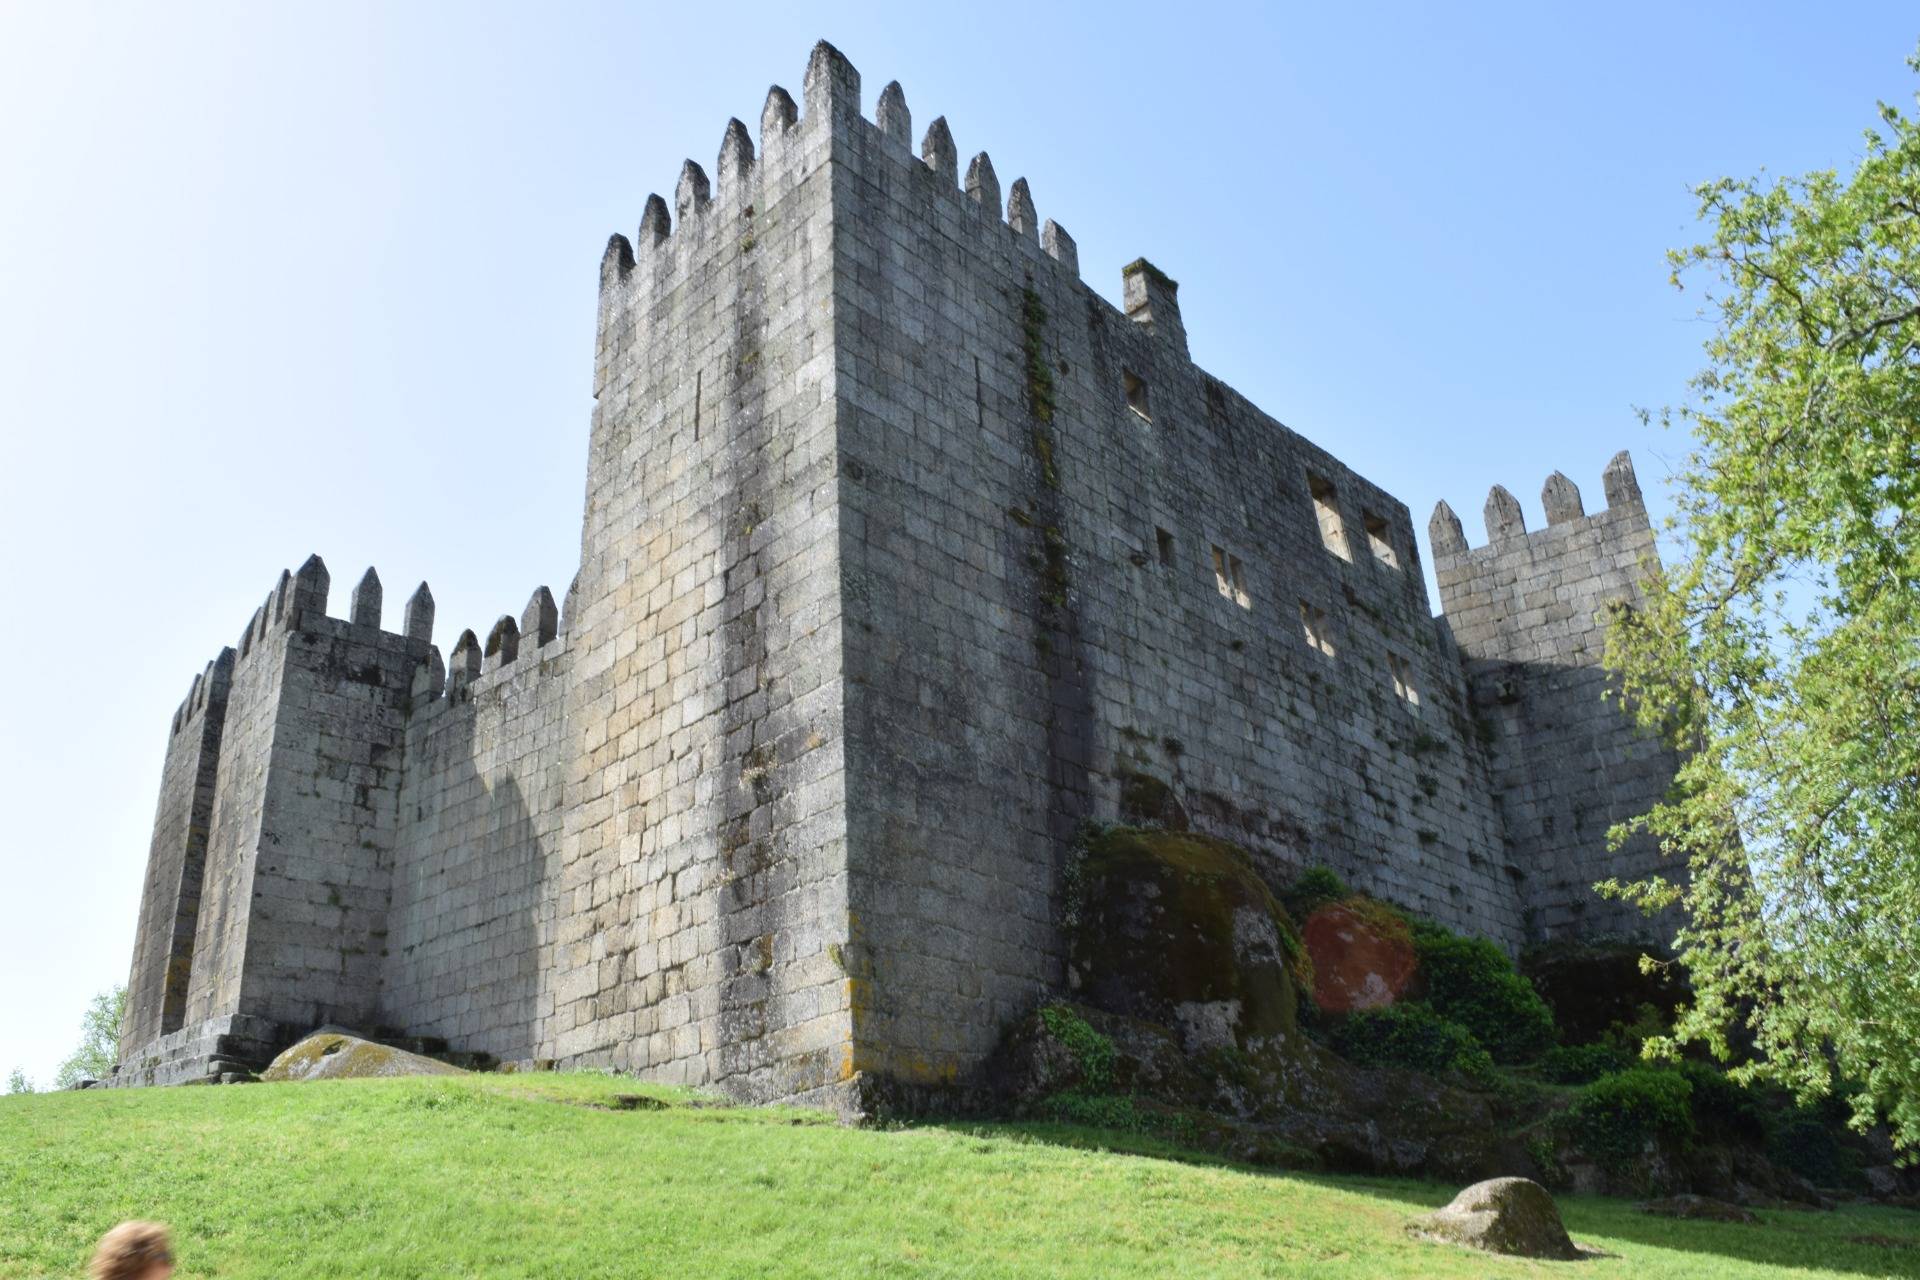 Guimaraes castle